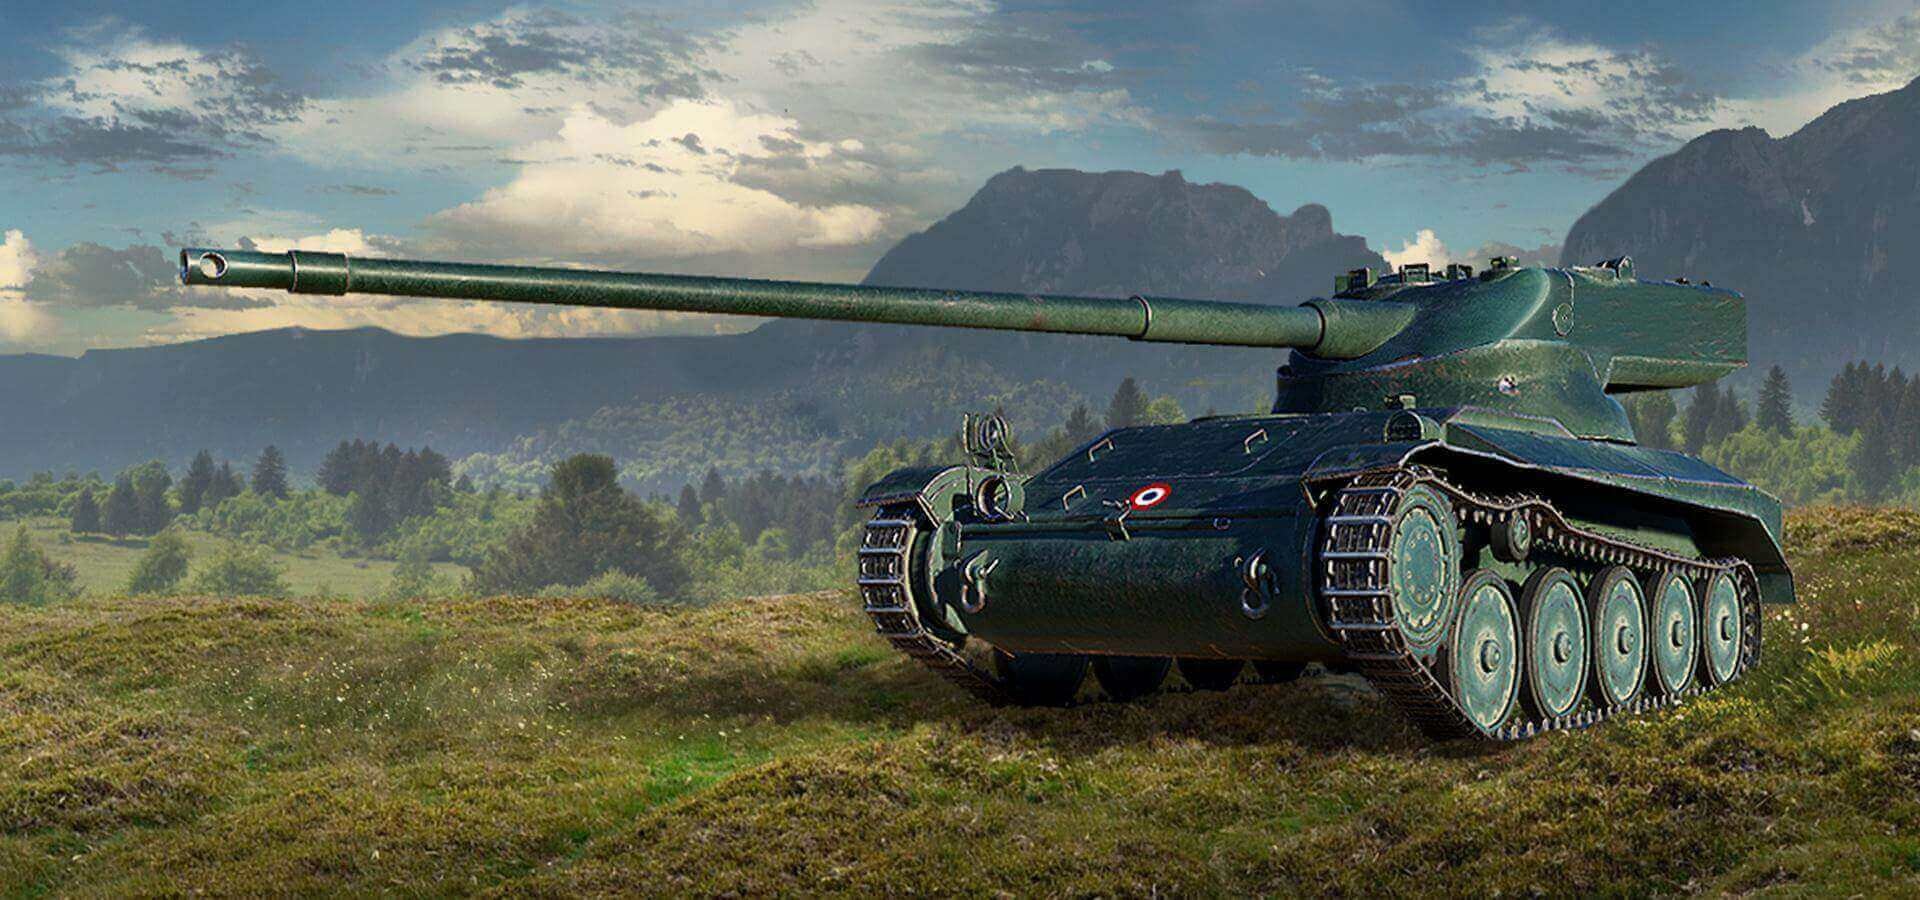 57 13 1. AMX 13 57. AMX 13 57 gf. АМХ 1357. World of Tanks AMX 13 57.